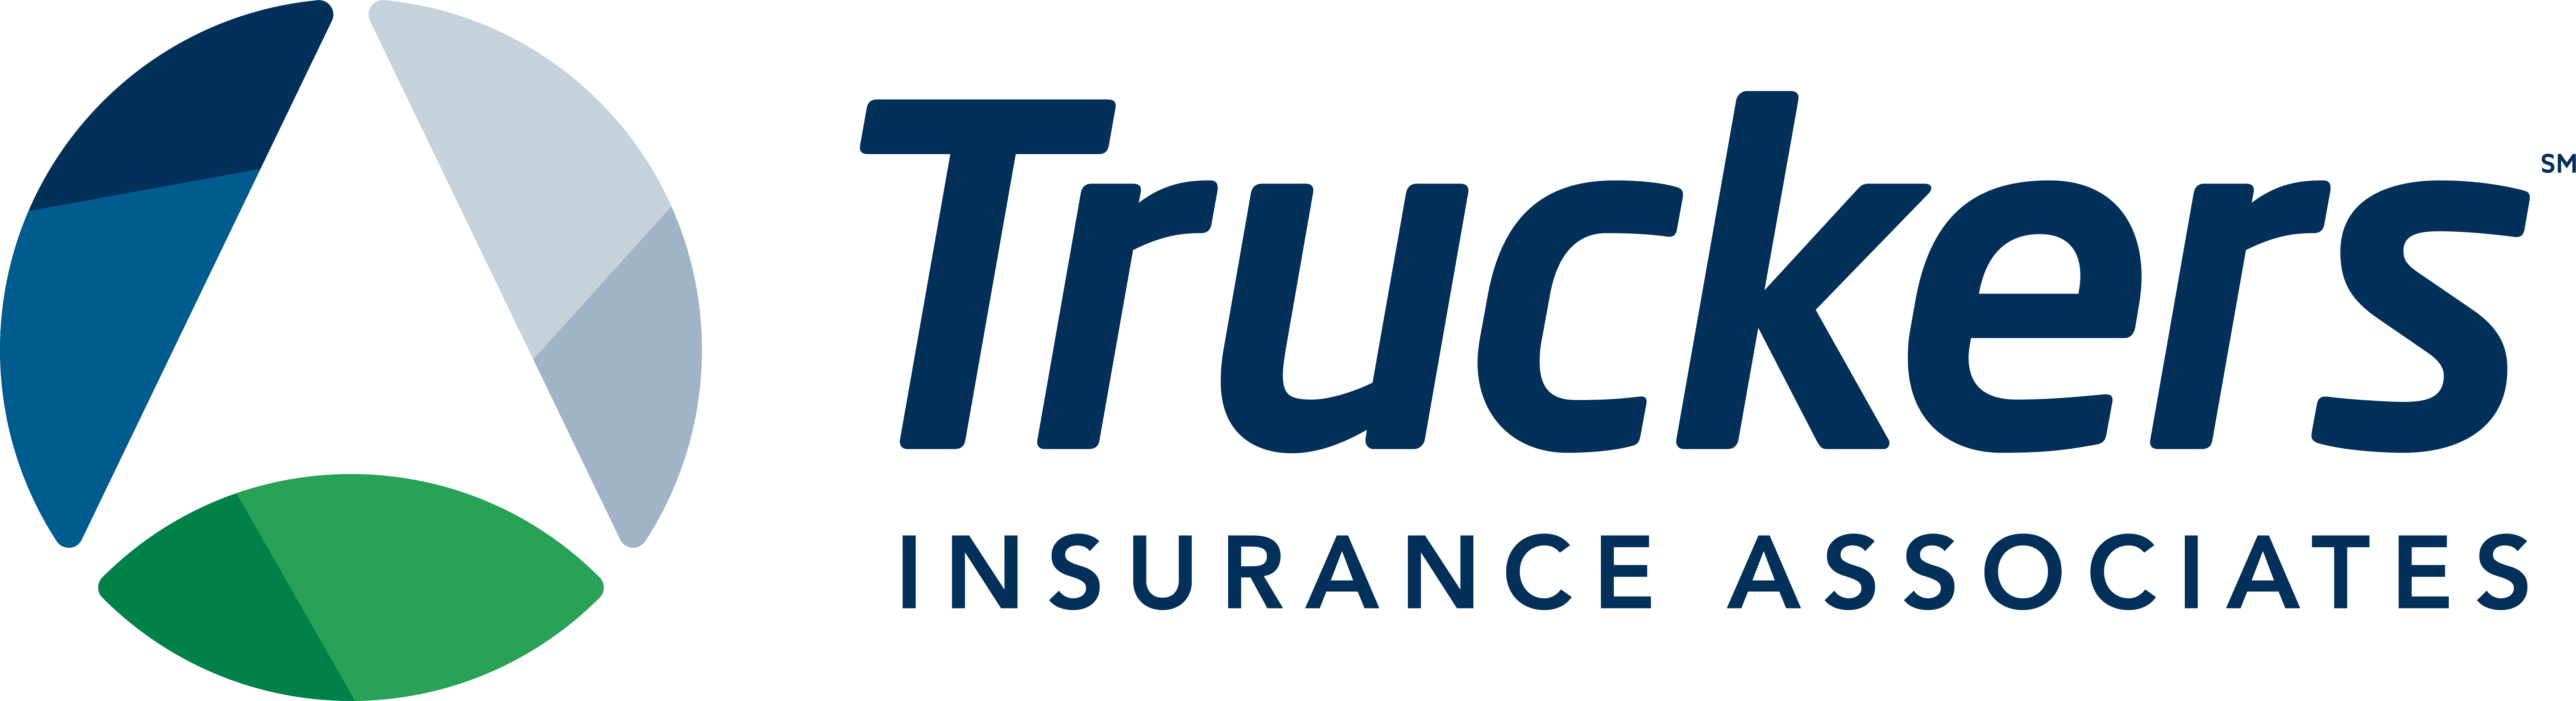 Truckers Insurance Associates logo